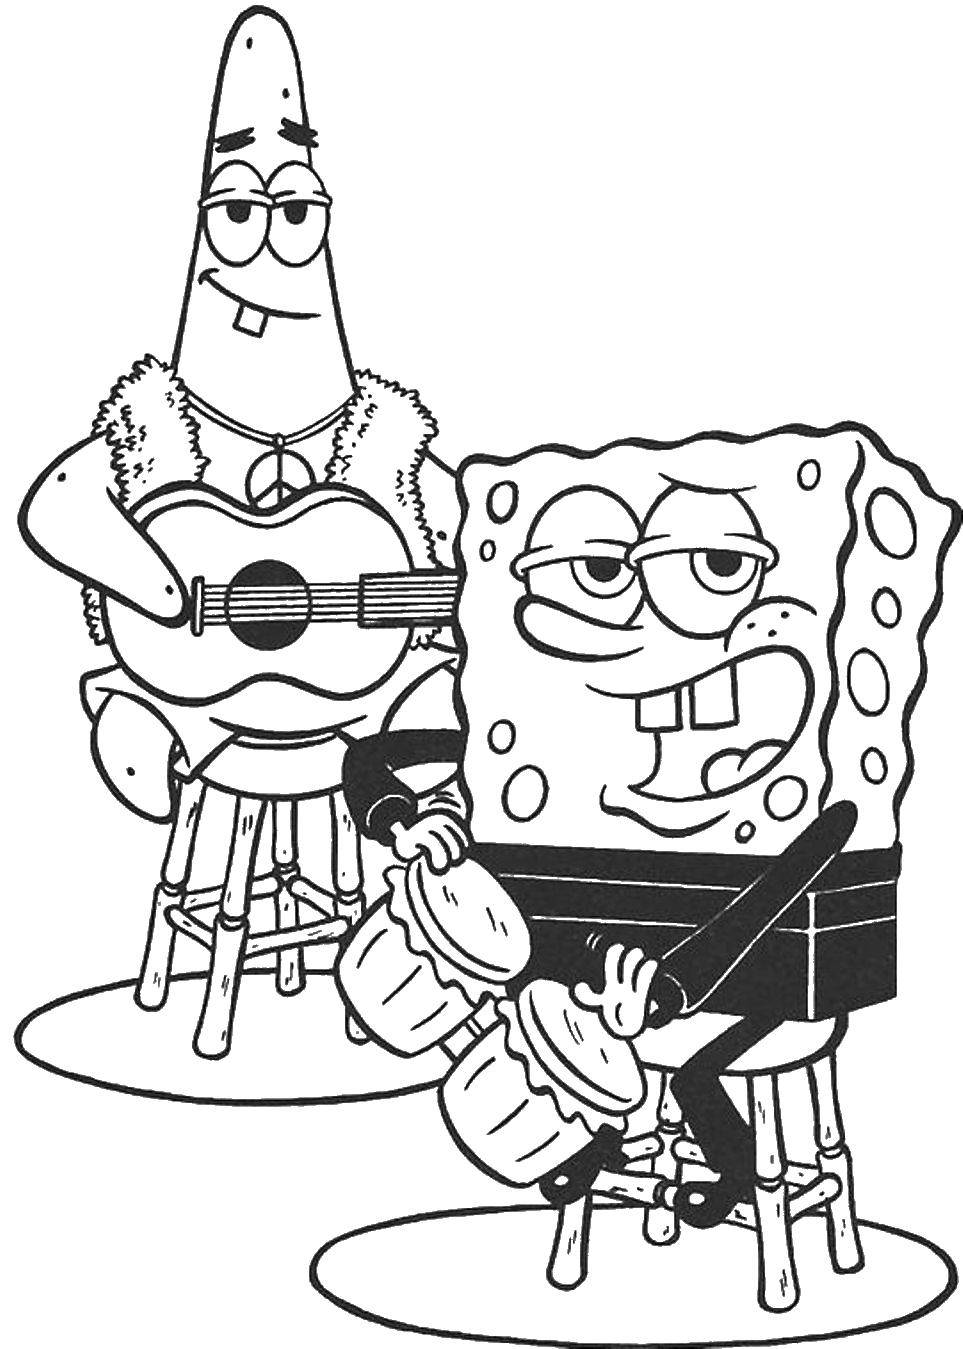 Coloring Spongebob and Patrick play instruments. Category Spongebob. Tags:  spongebob, cartoon, Patrick.